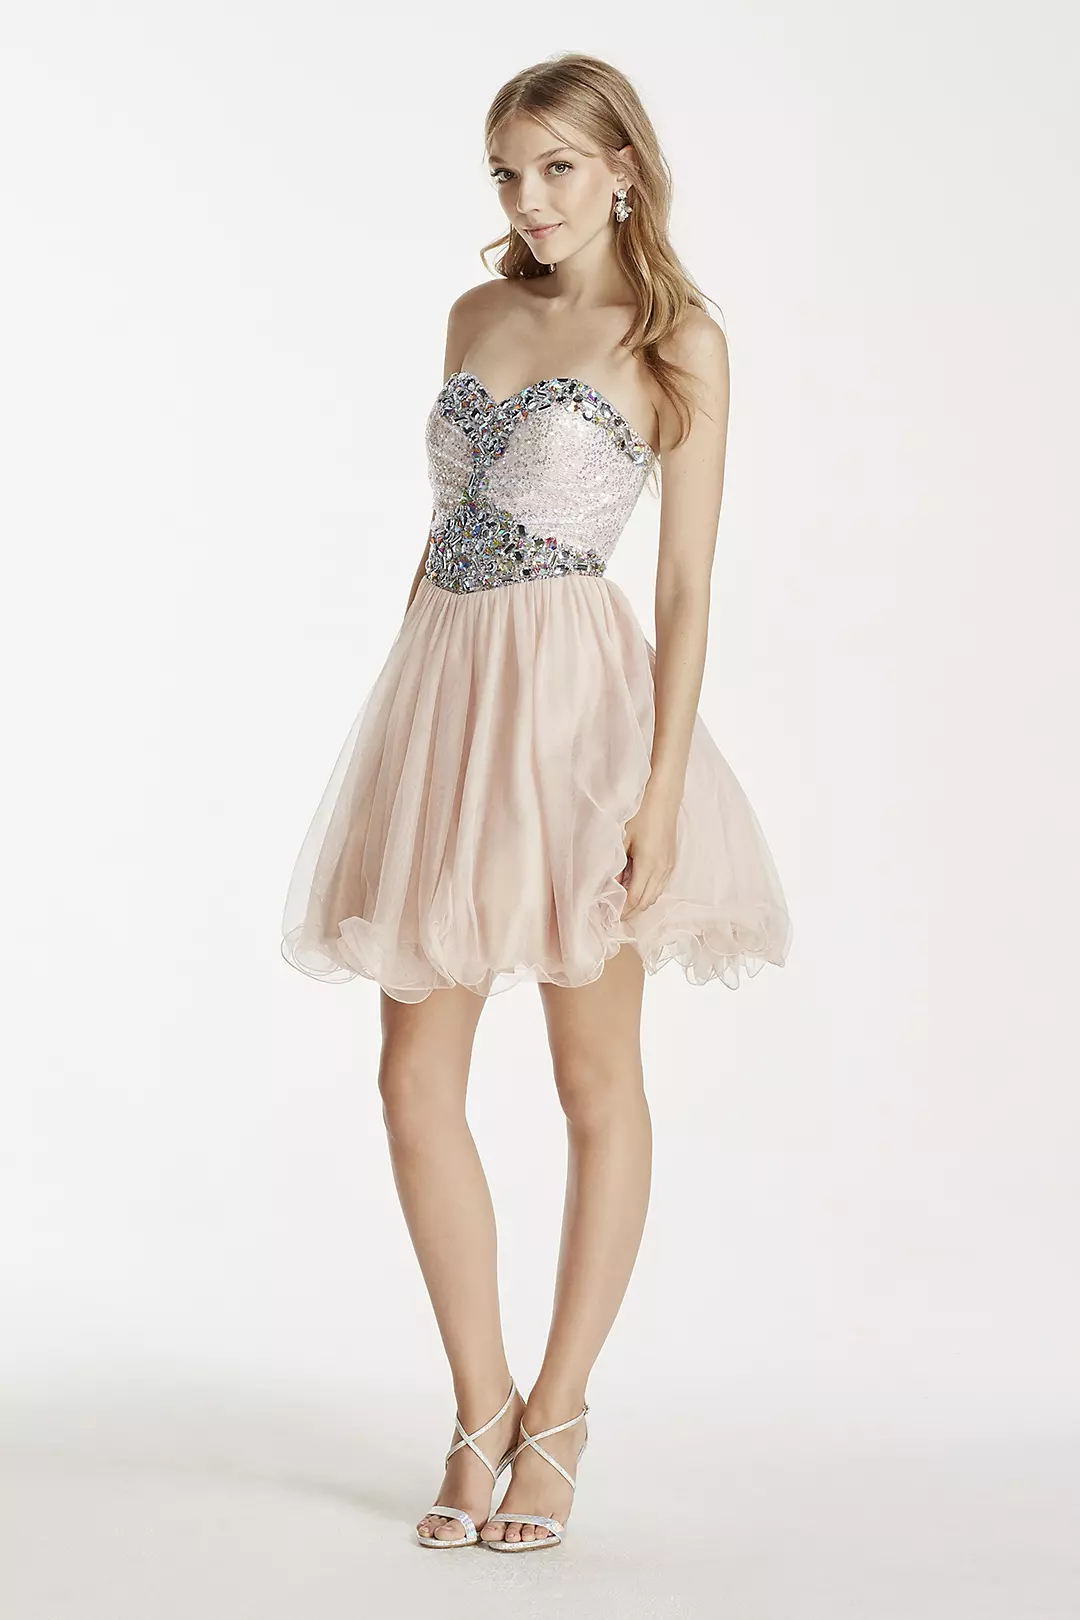 Sequin and Crystal Embellished Short Tulle Dress Image